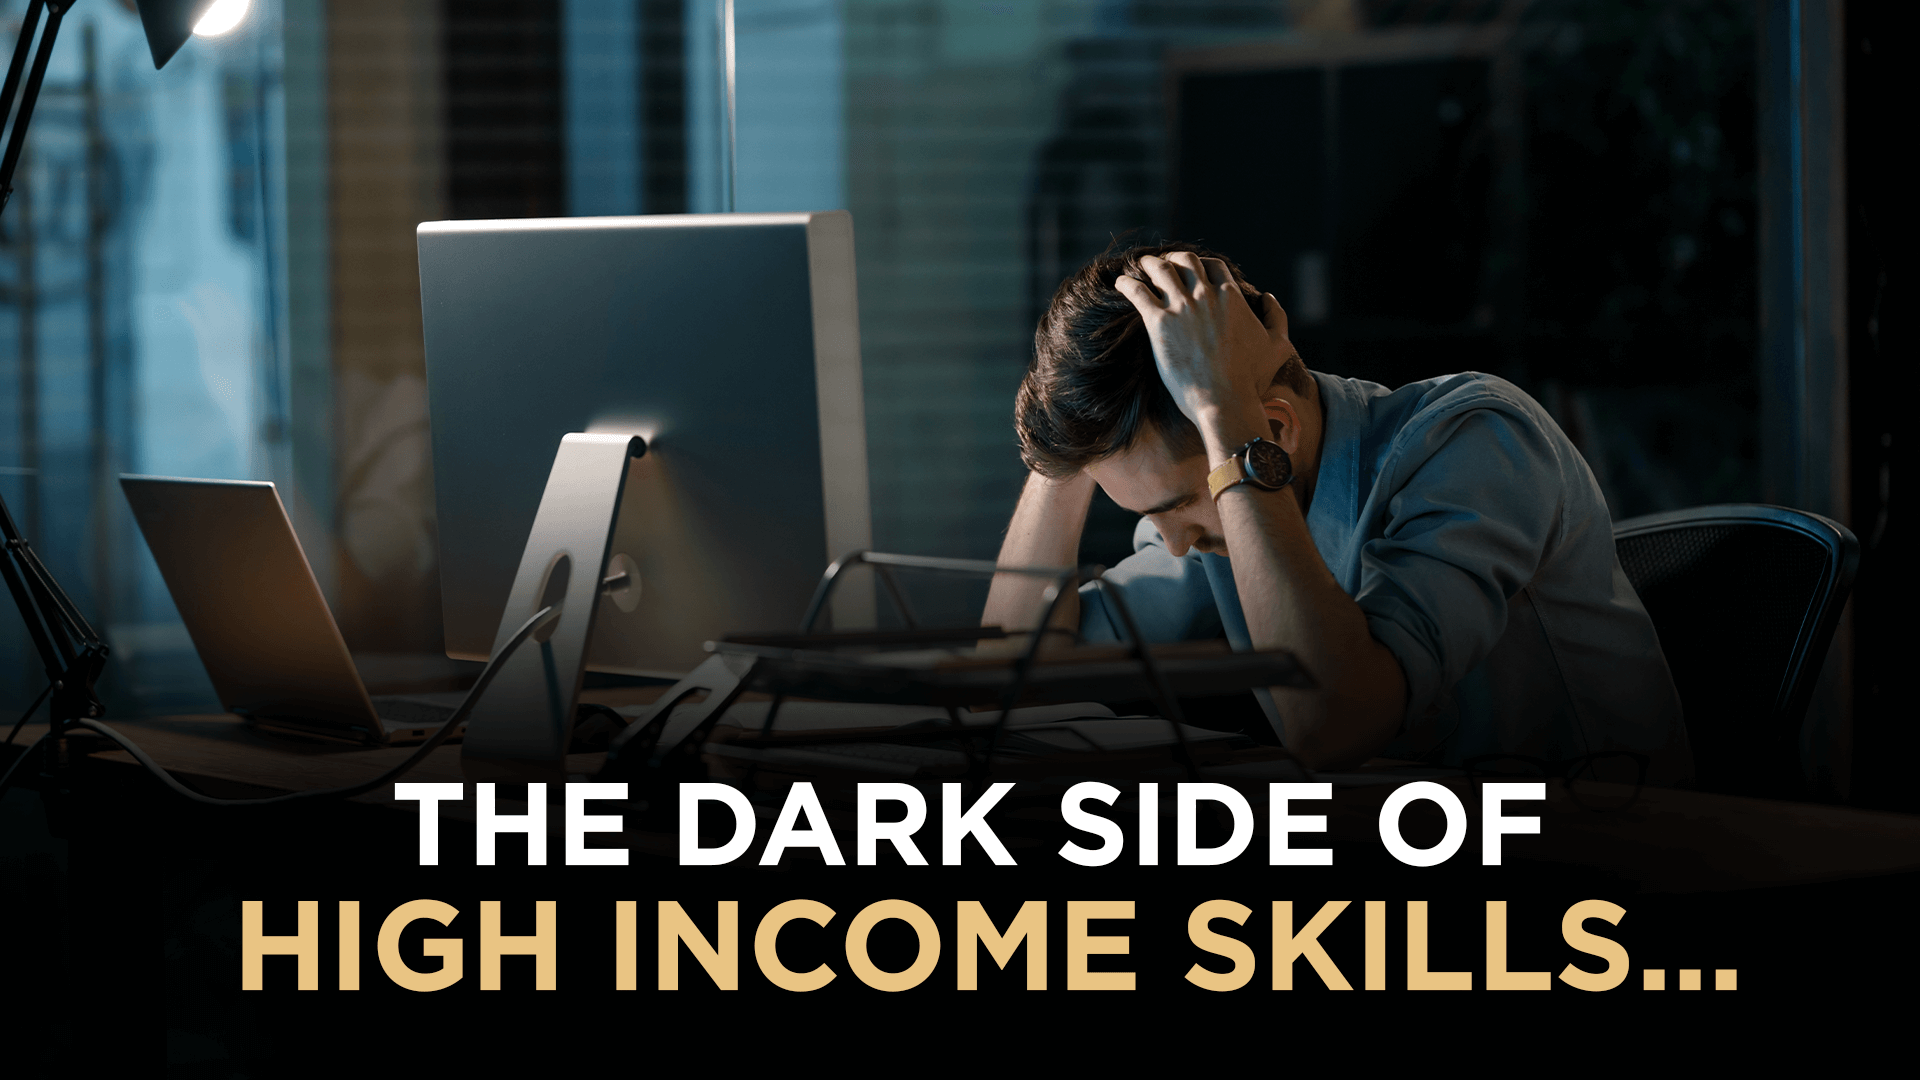 The dark side of high income skills